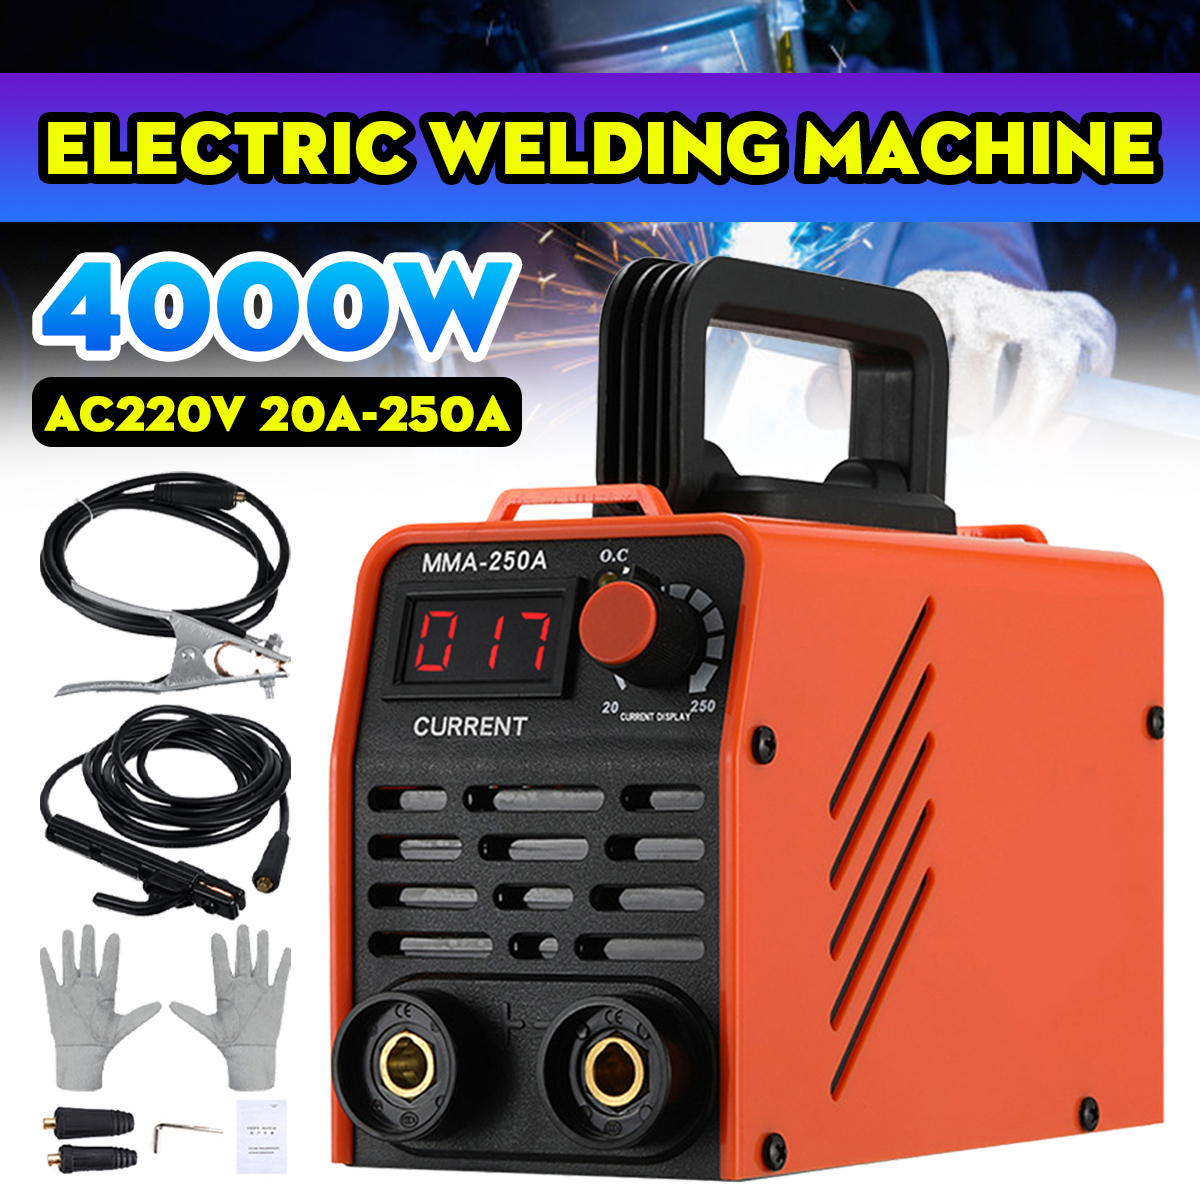 MMA-250-4000W-Electric-Welding-Machine-AC220V-ARC-Welder-Inverter-for-Home-Beginner-Iron-Stainless-S-1870557-2